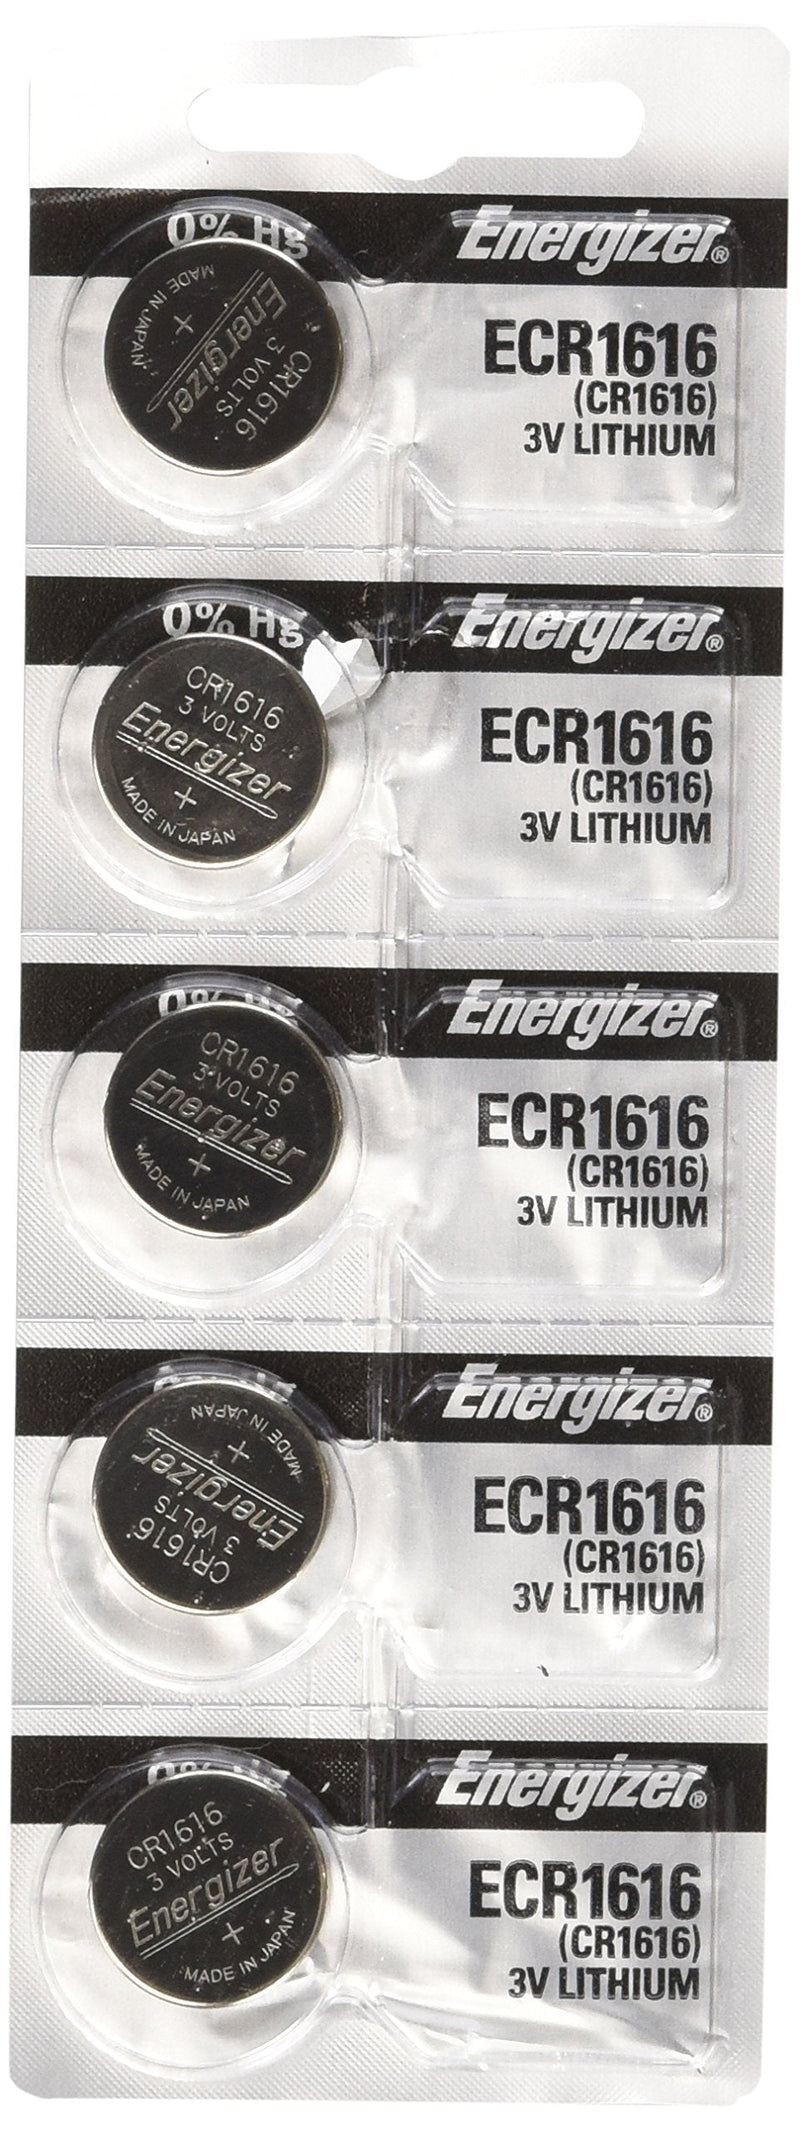 [Australia] - Energizer CR1616 3V Lithium Battery -Pack of 5 5 Count (Pack of 1) 